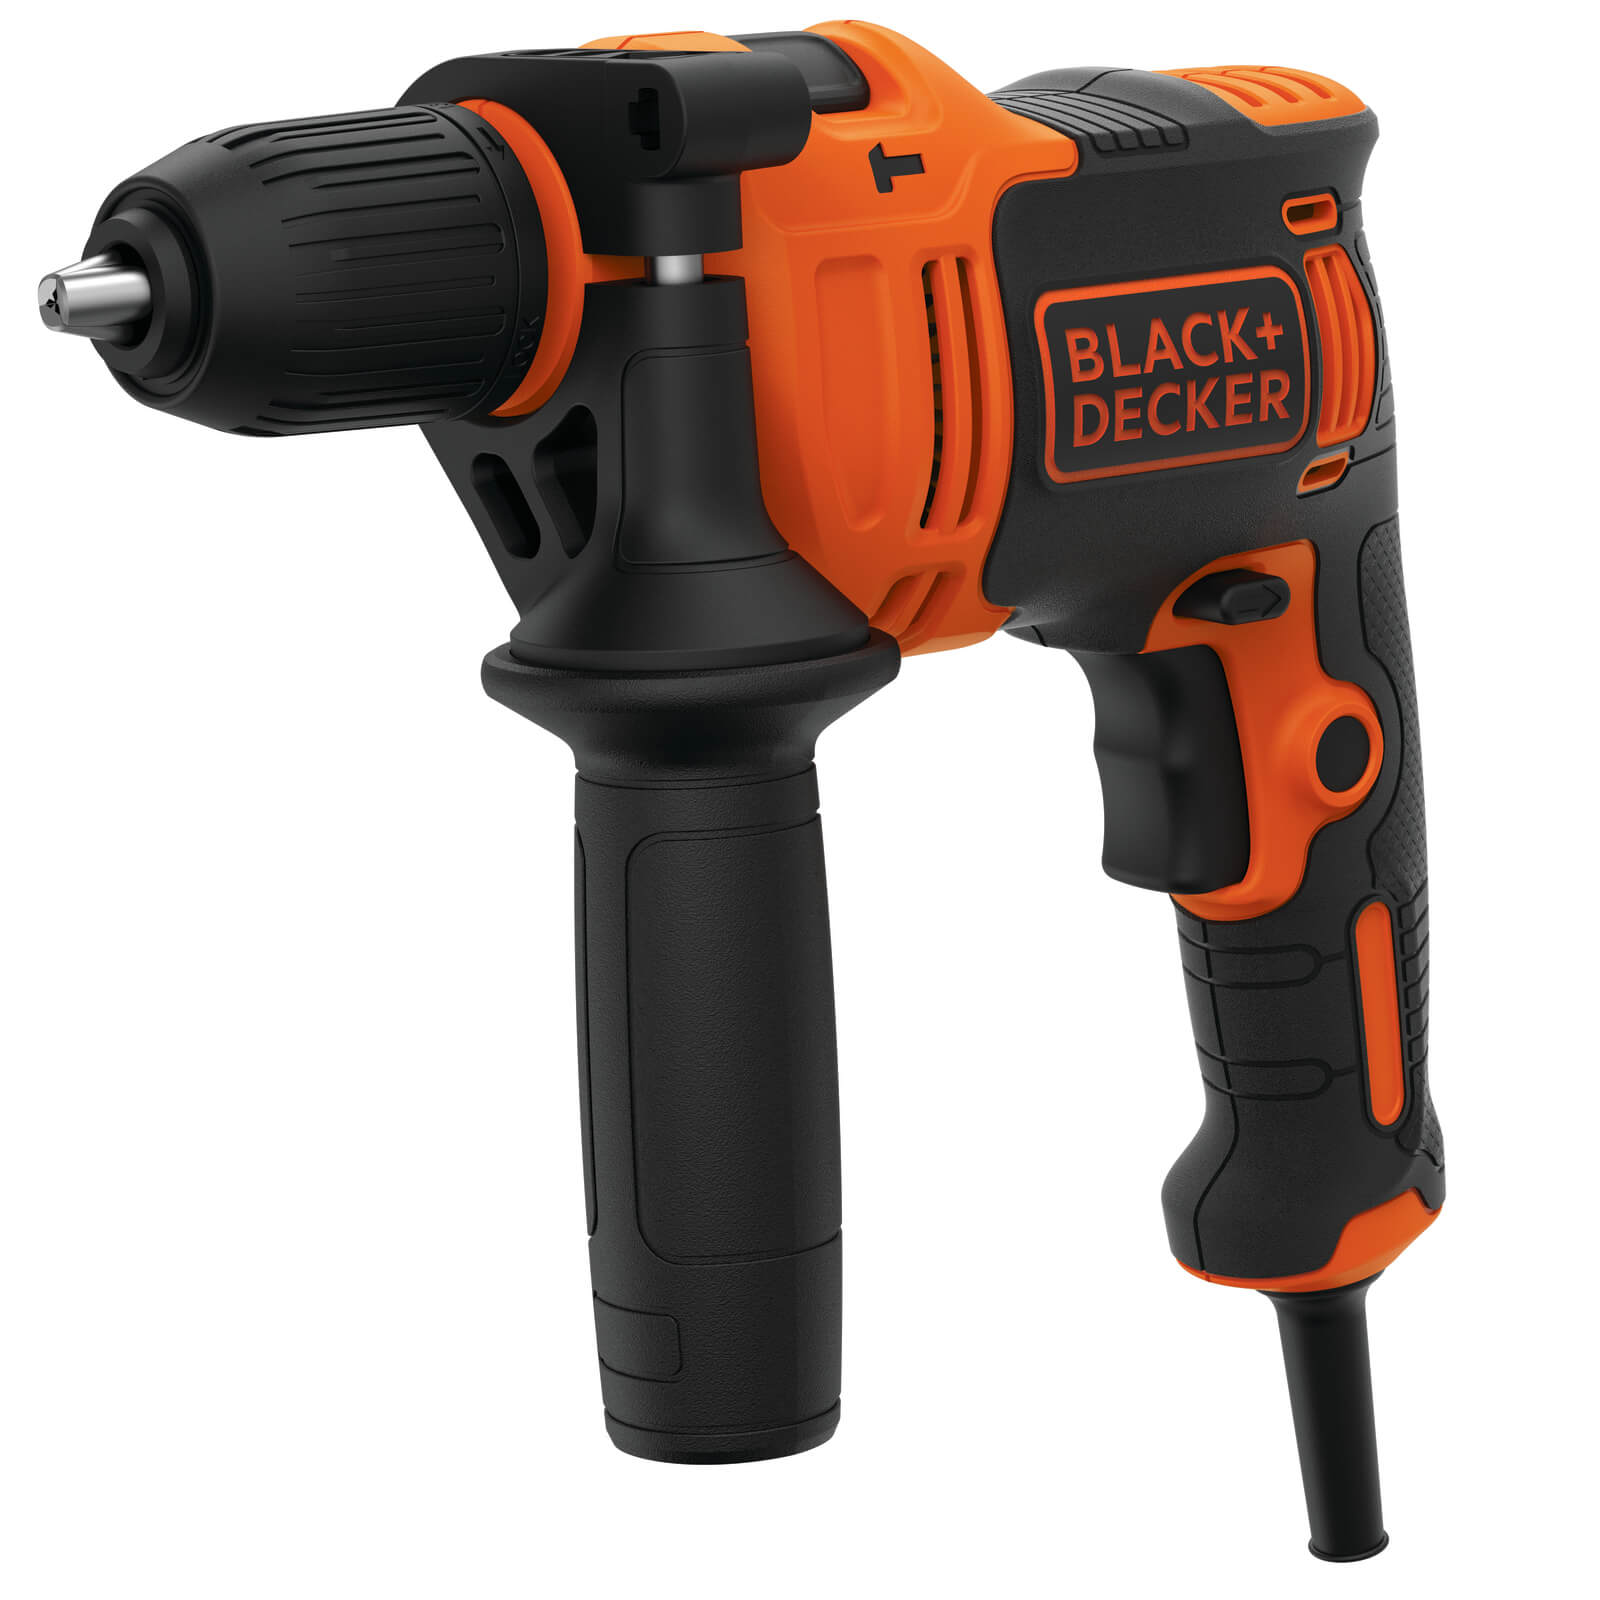 BLACK+DECKER 13mm 710W Corded Hammer Drill with Drill Bit Accessories and Kit Box (BEH710K-GB)